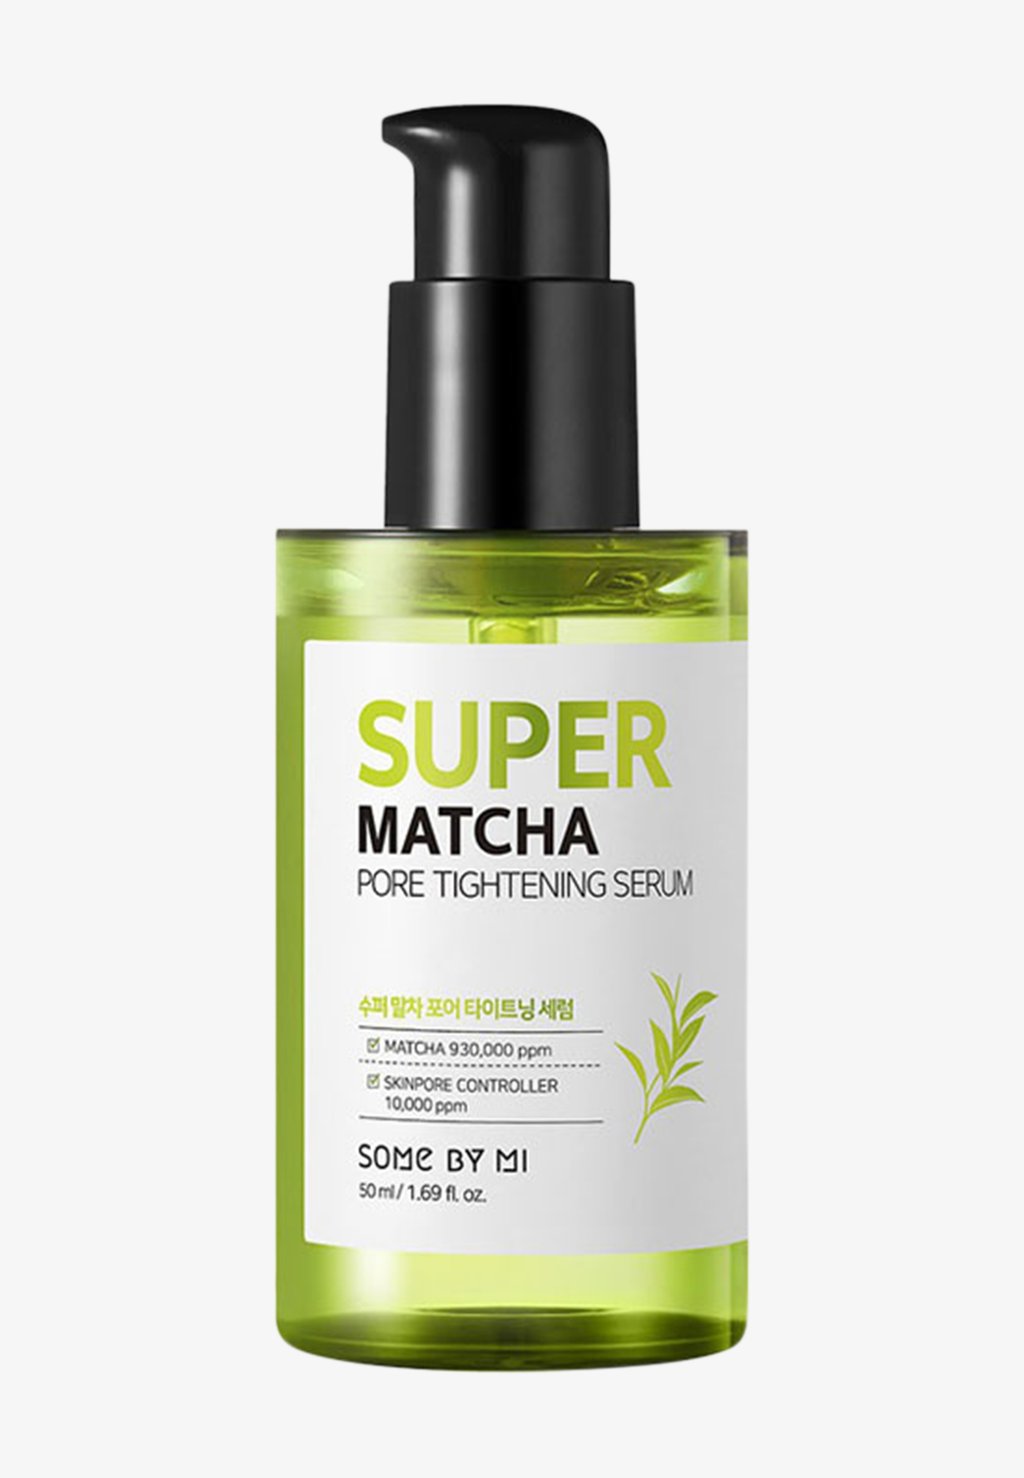 Сыворотка Super Matcha Pore Tightening Serum SOME BY MI